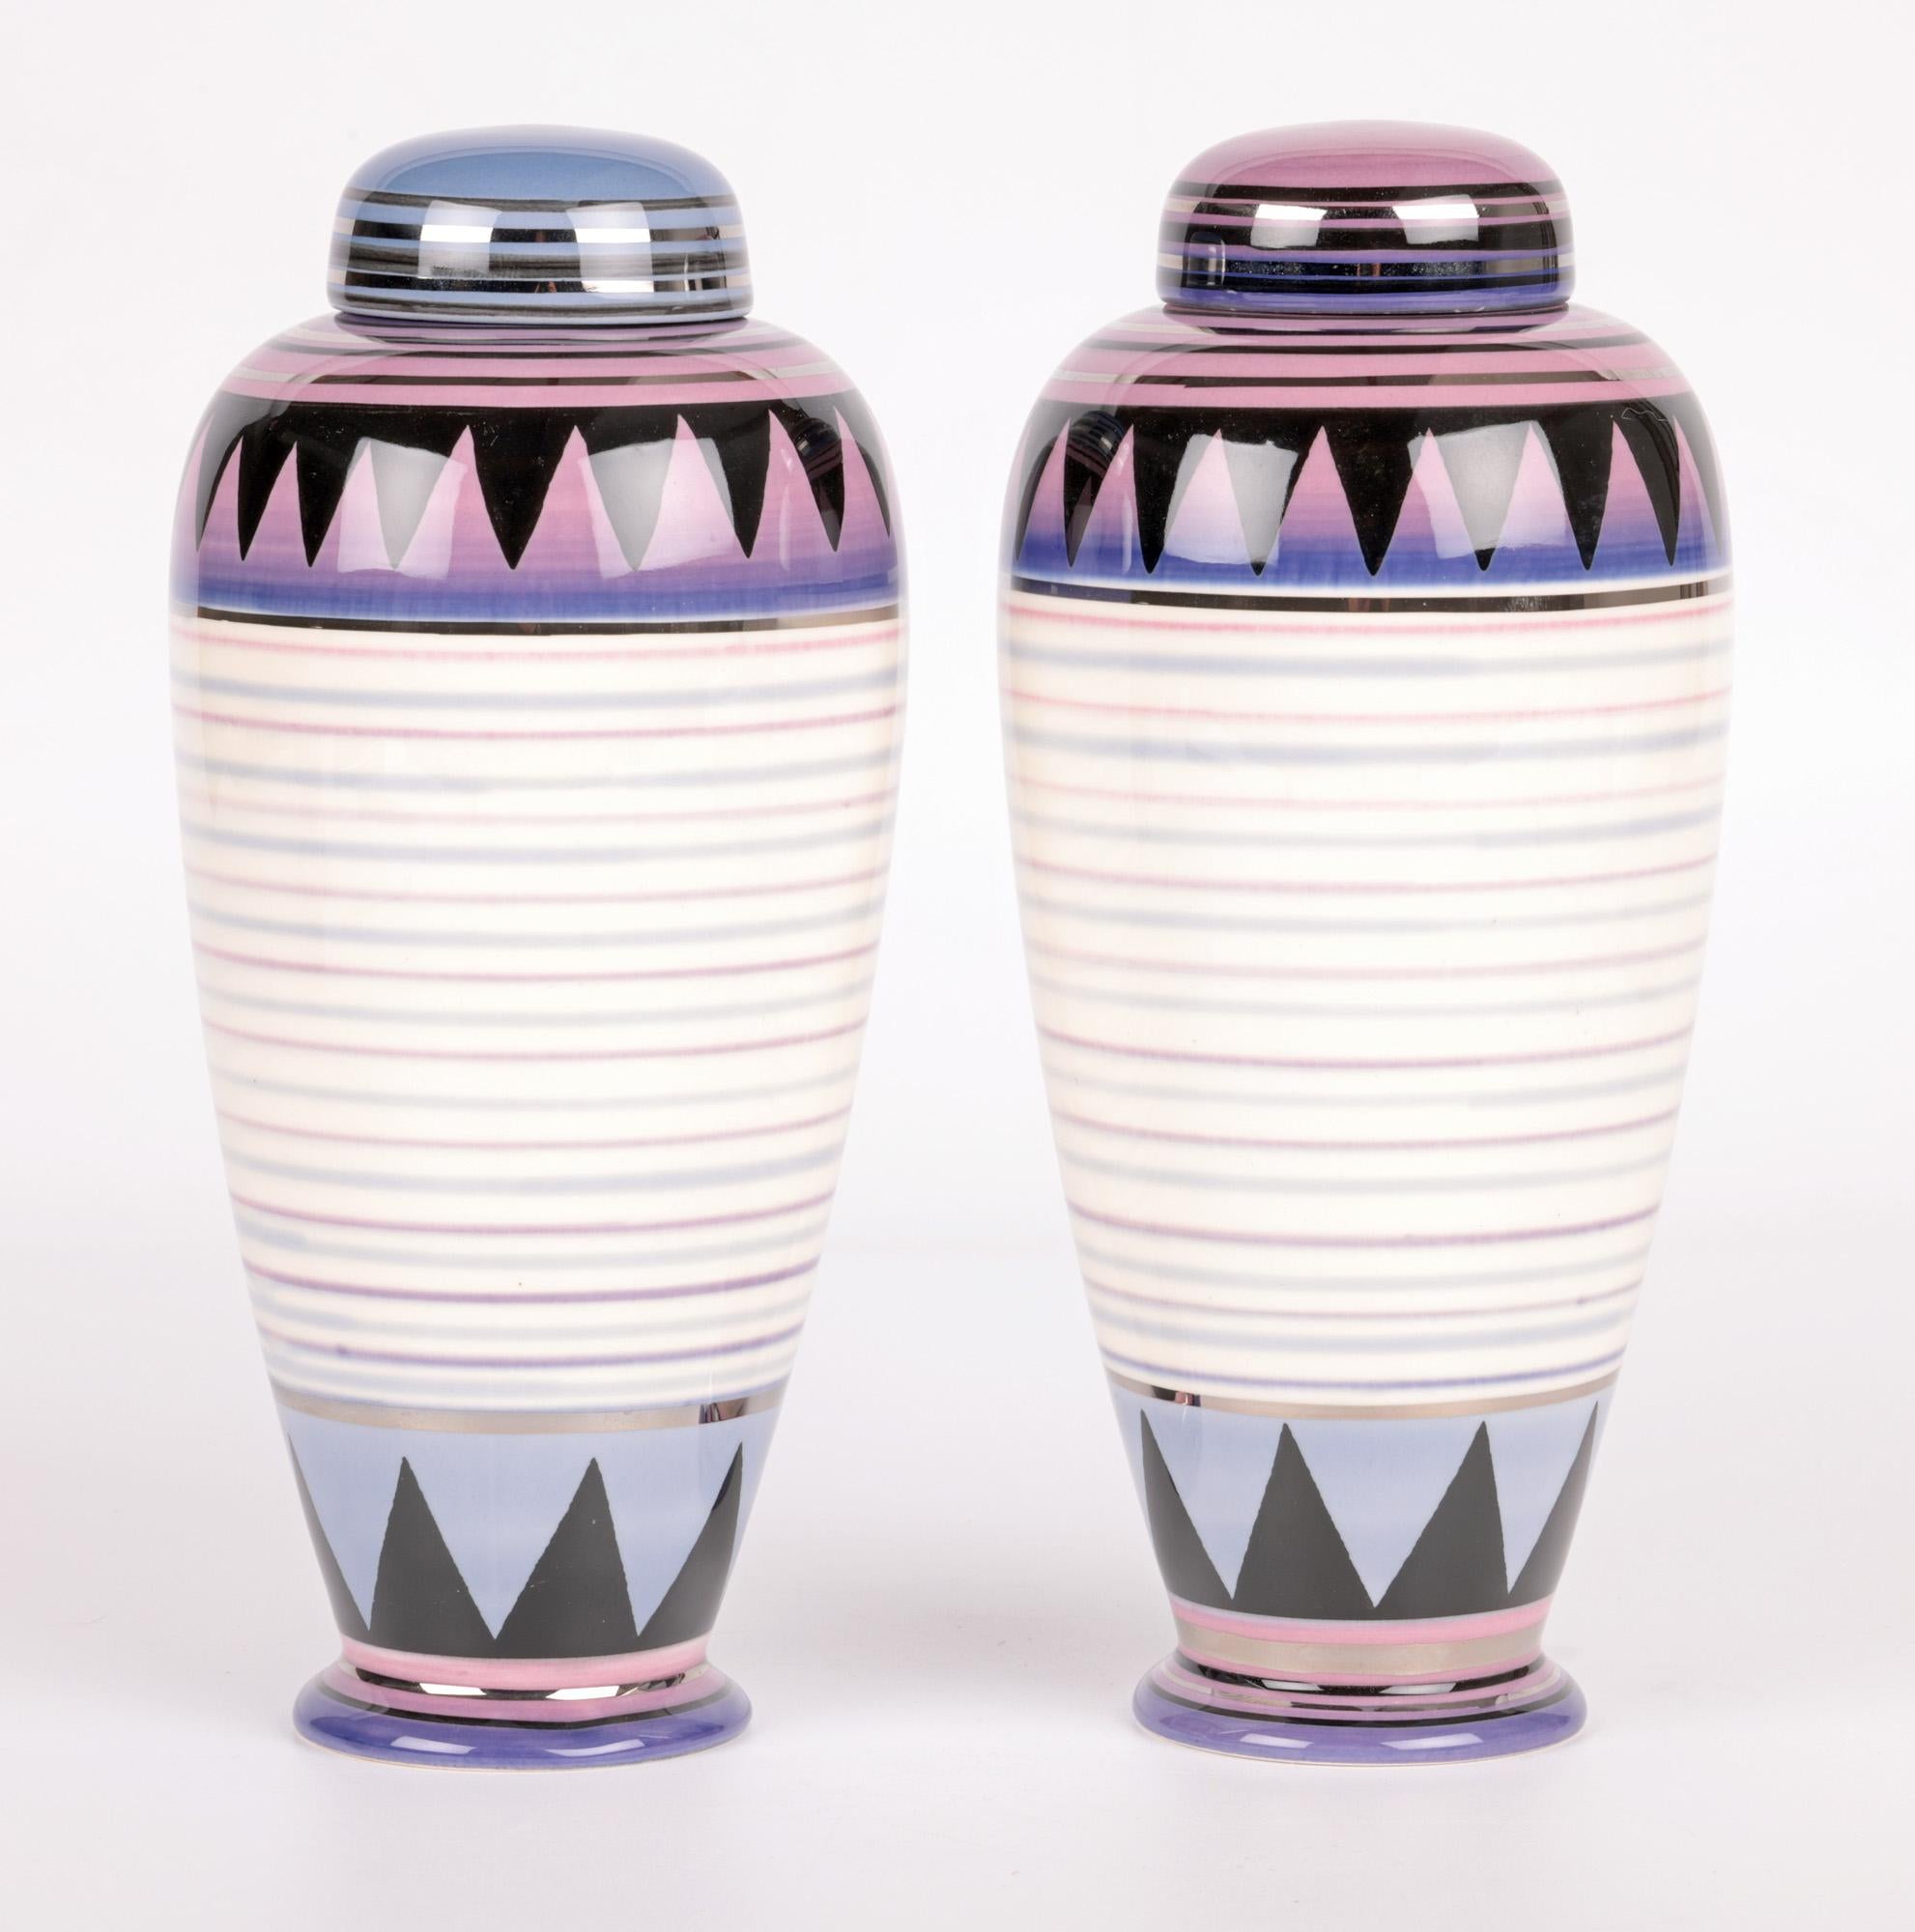 Moorland Pottery Paar keramische Vasen mit Deckeln   im Angebot 11